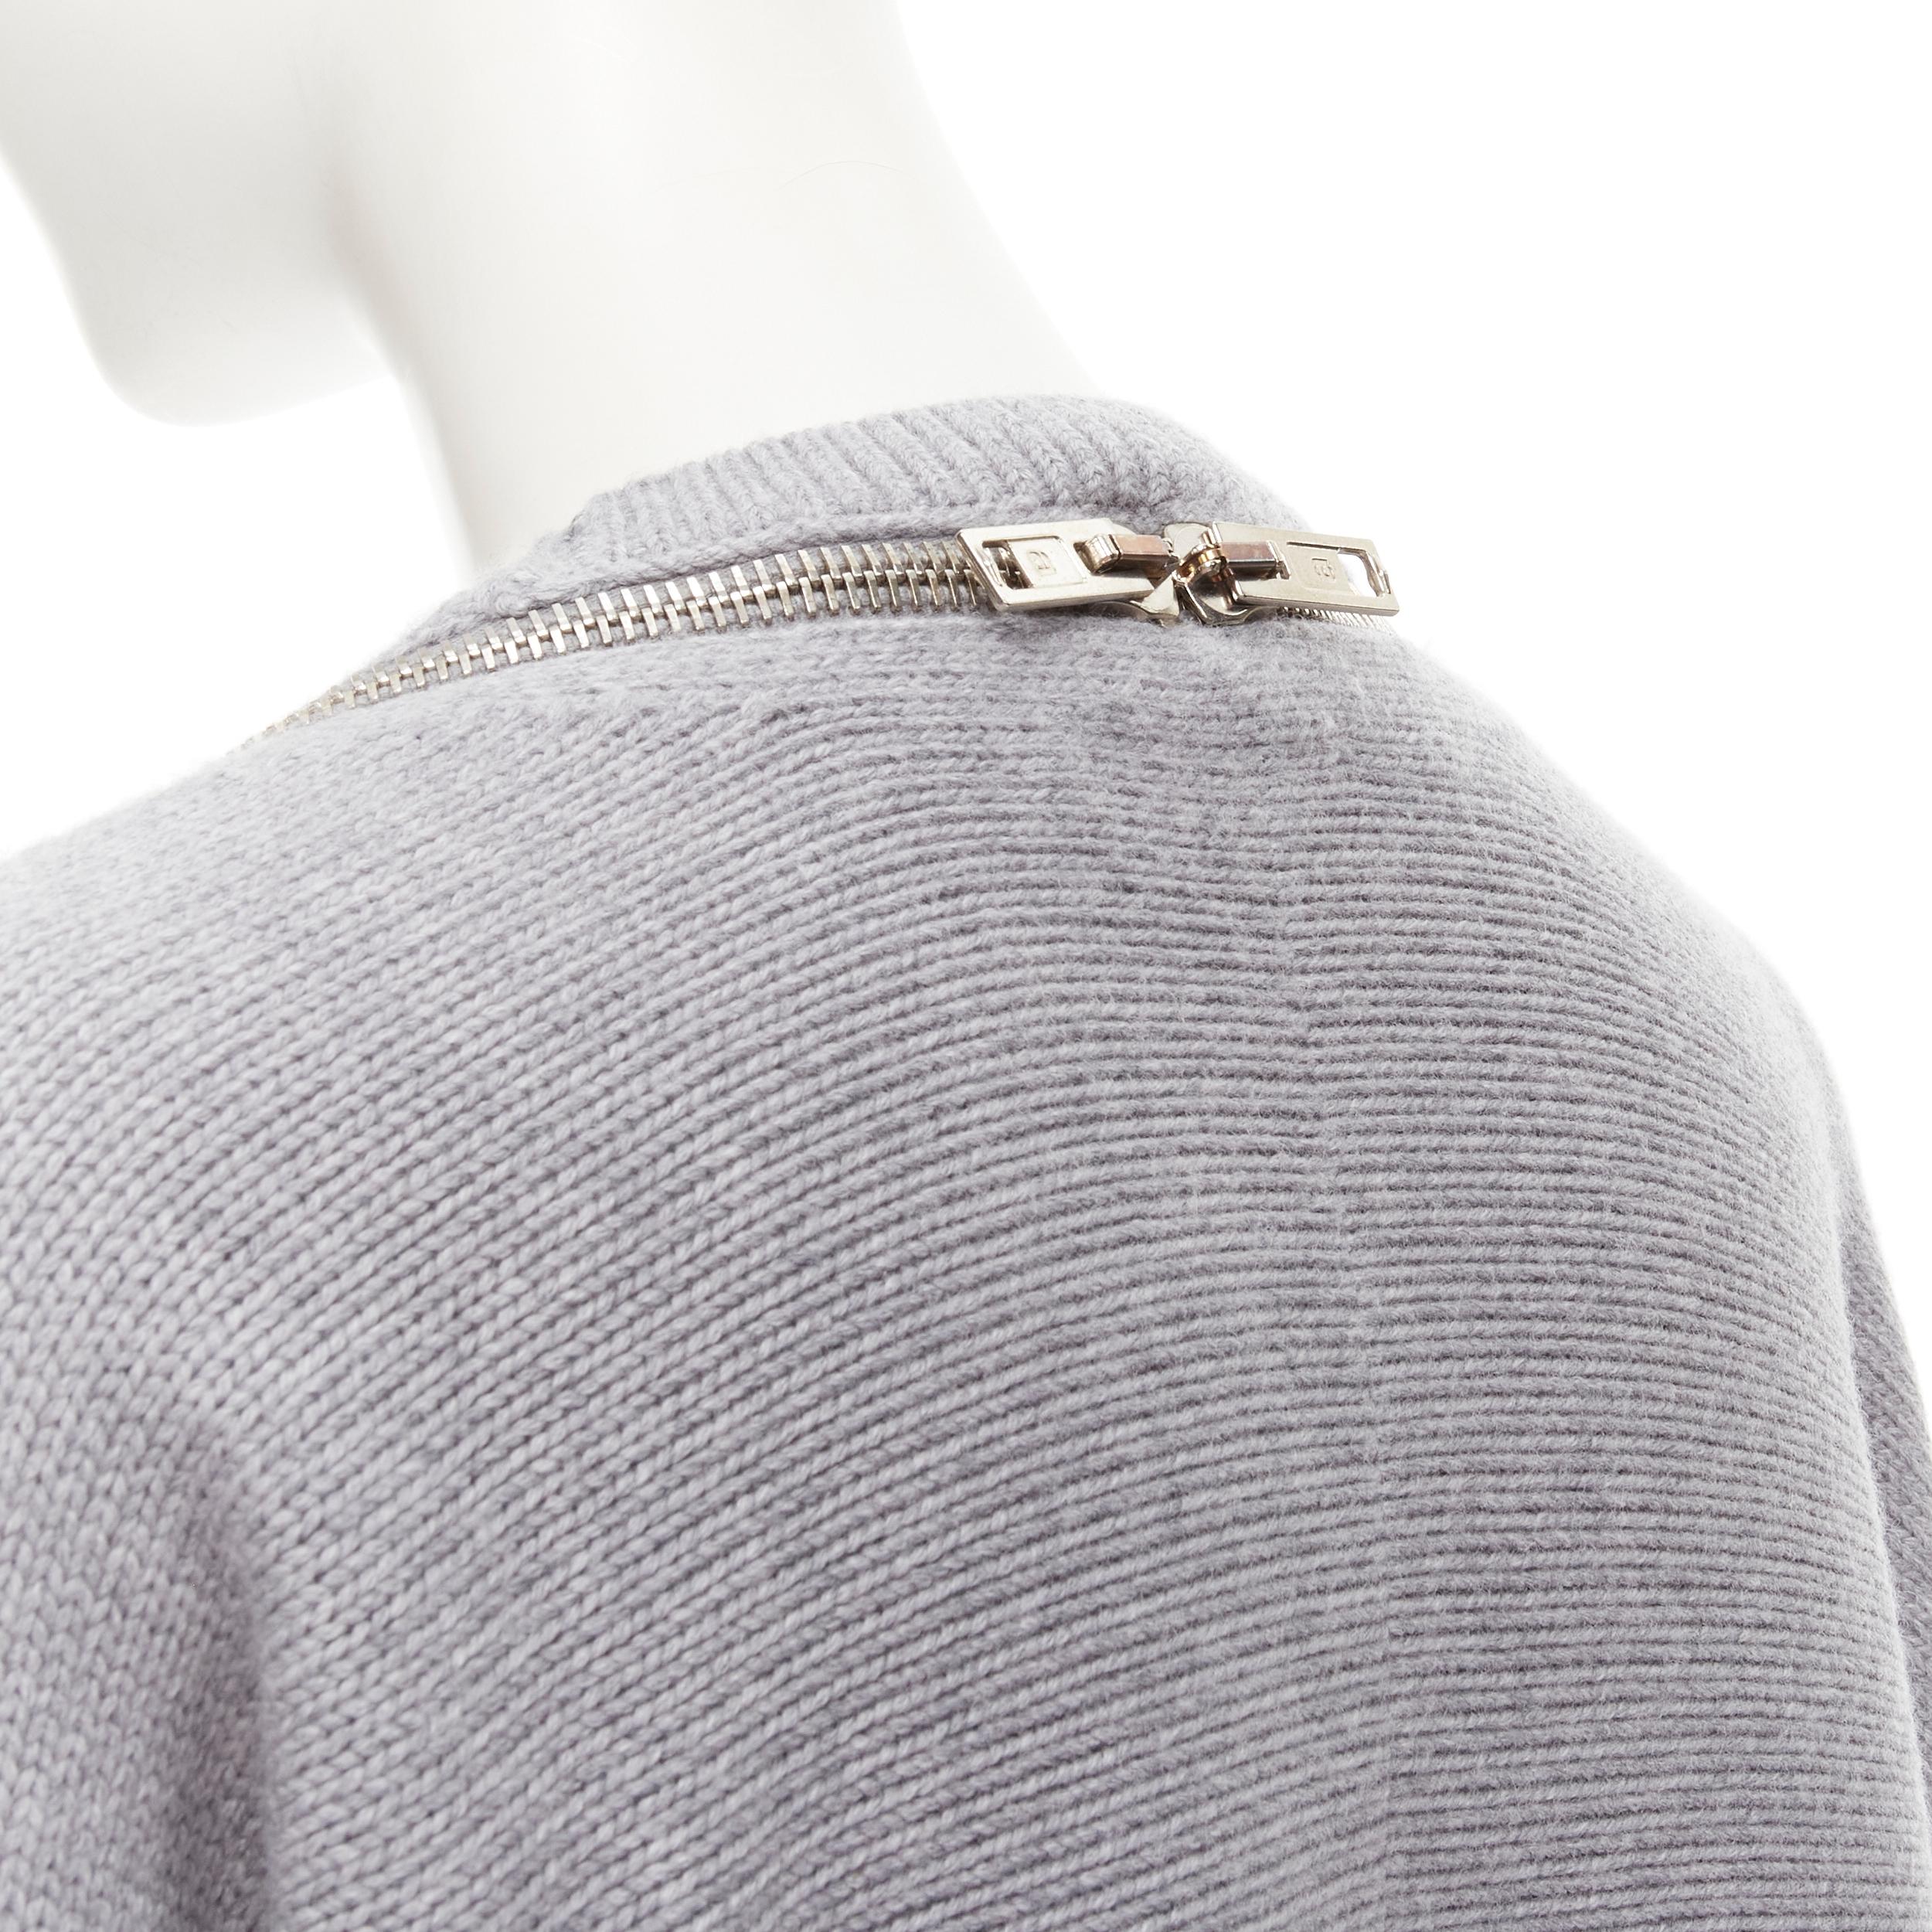 ALEXANDER WANG grey merino wool chunky knit zip trim sweater dress M 4